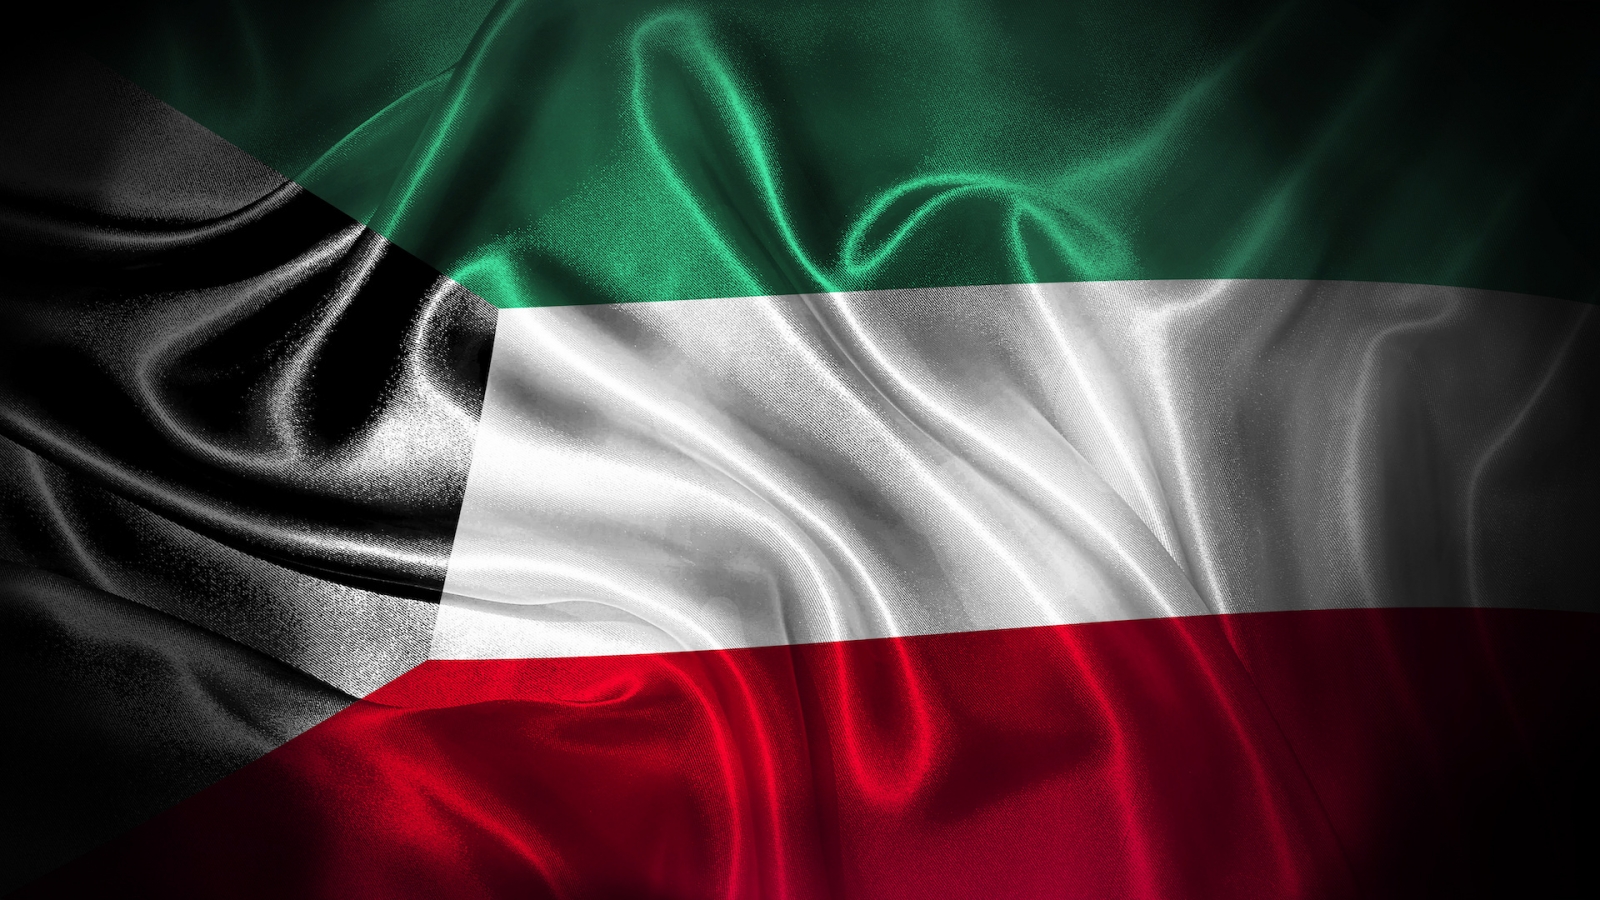 Cerrar ondeando la bandera de Kuwait.  Bandera nacional de Kuwait